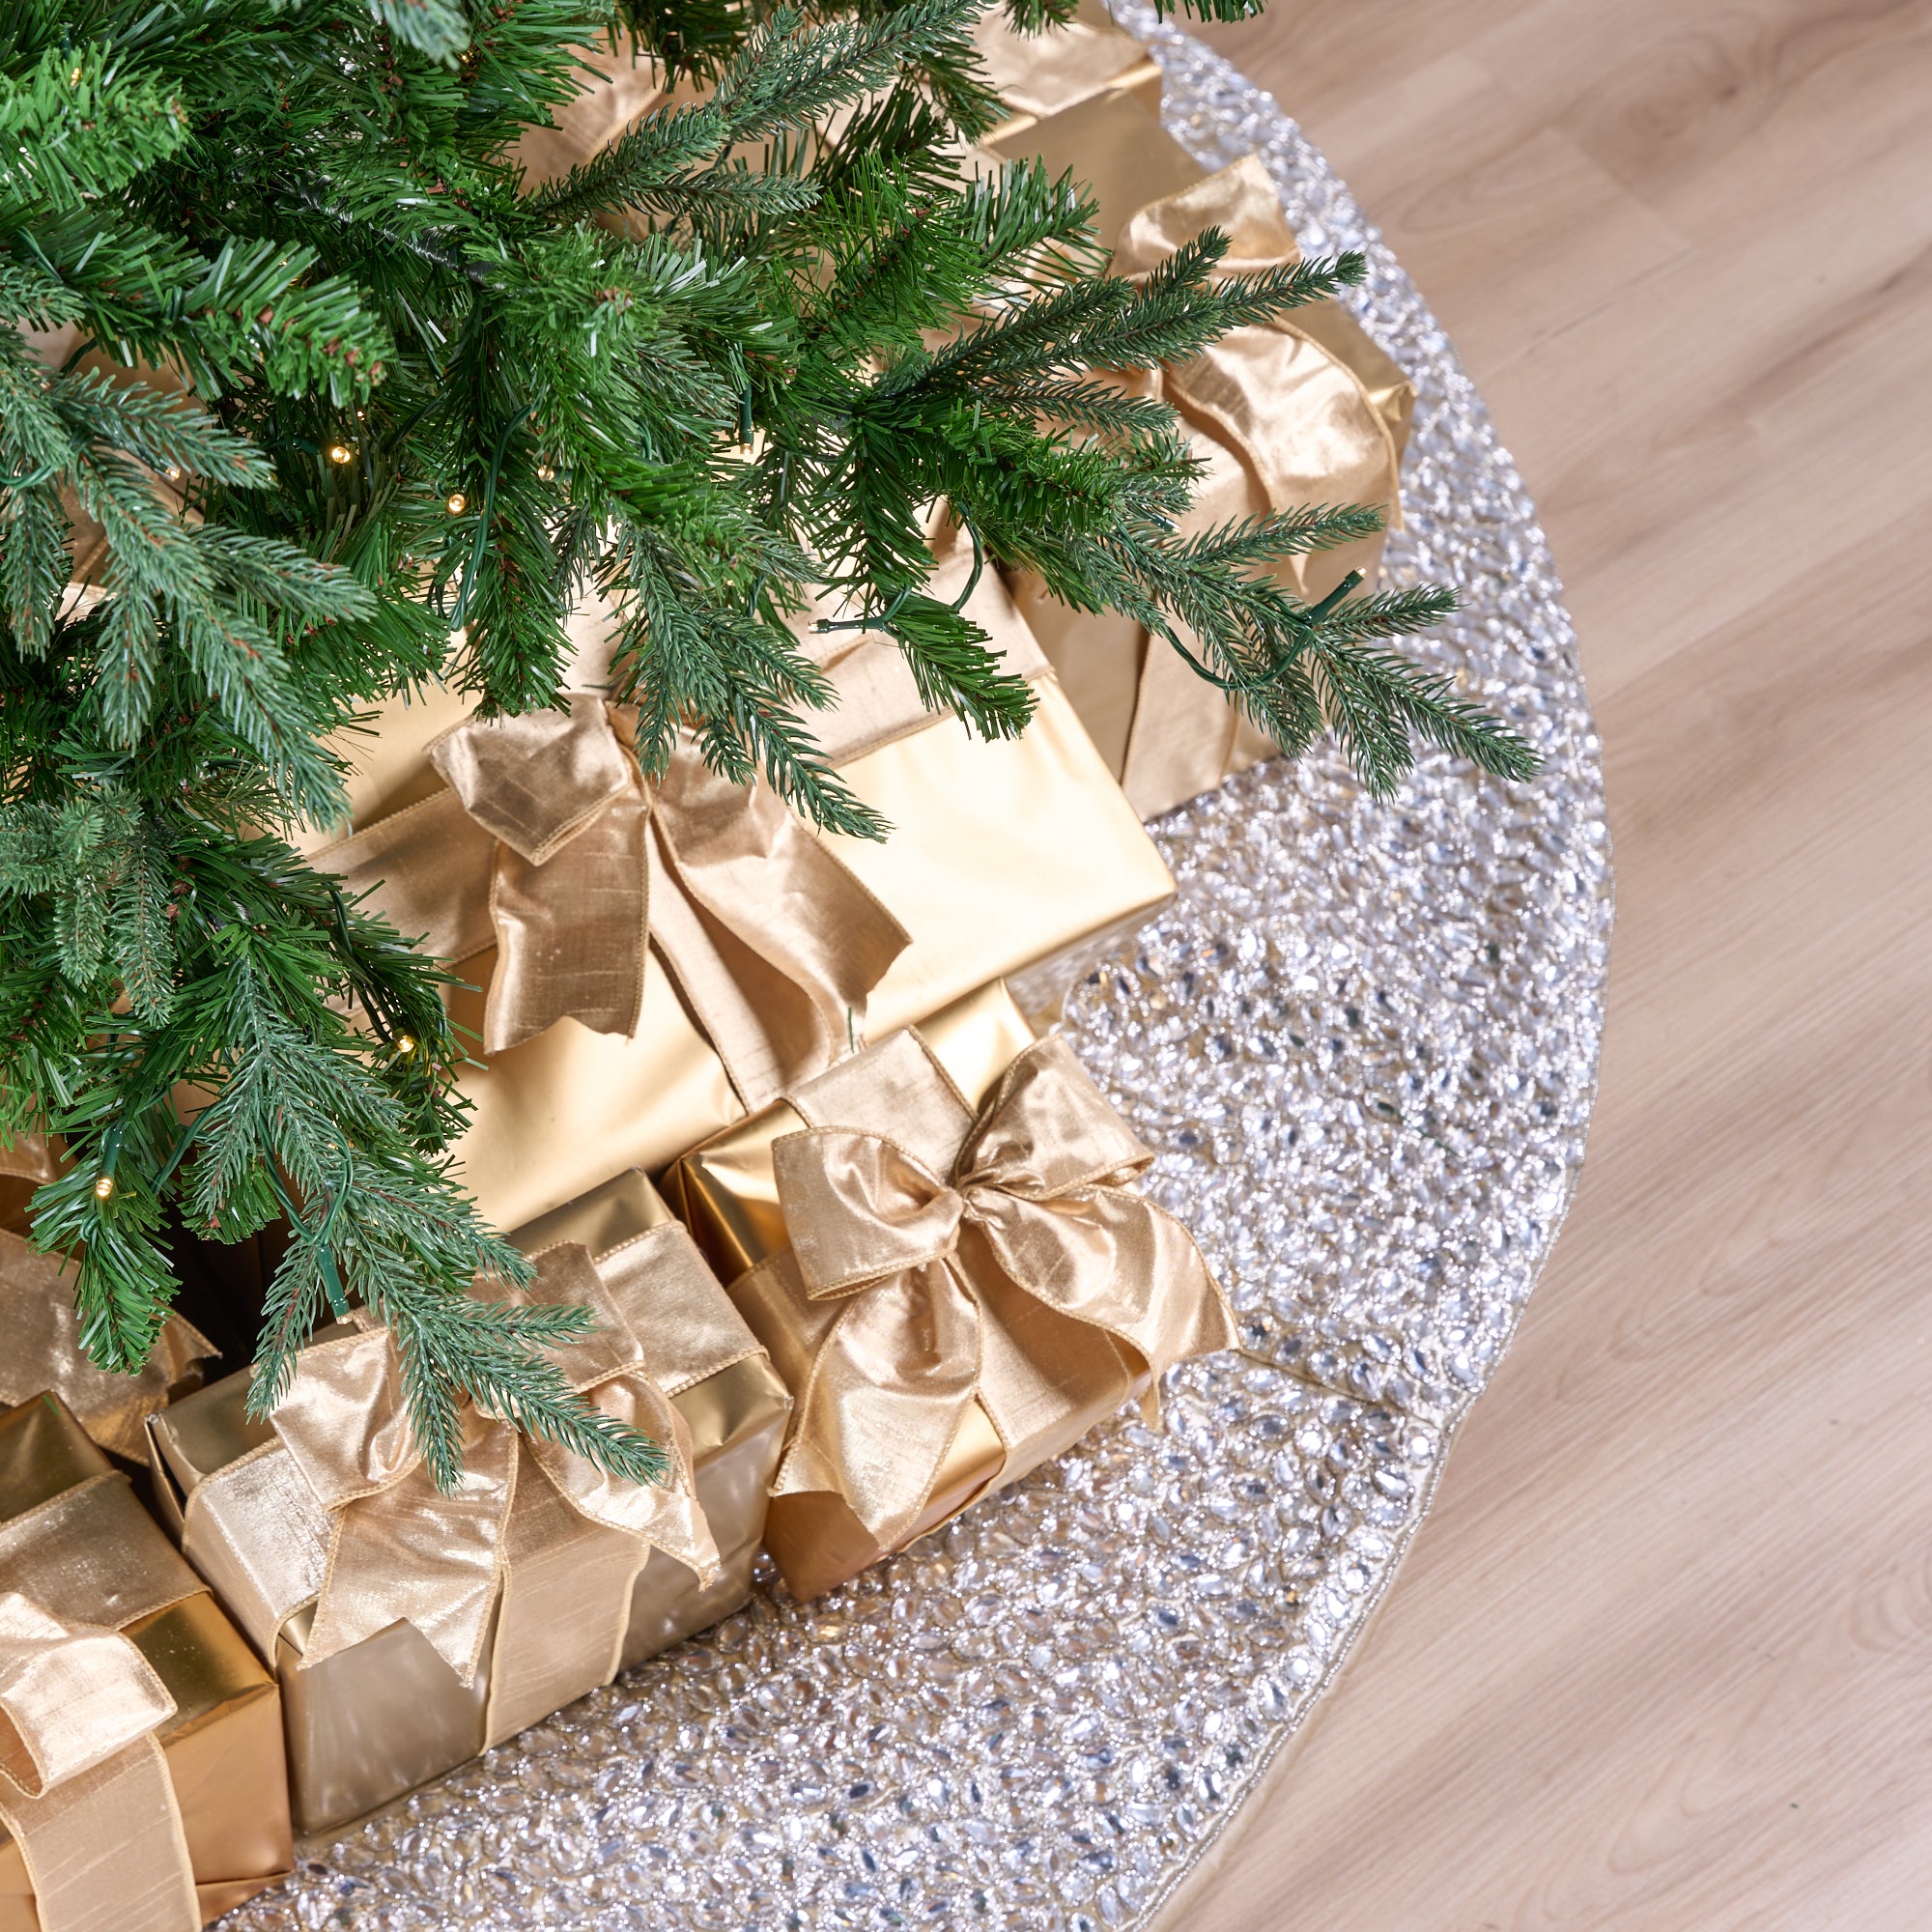 How to Change Pre-lit Christmas Tree Lights to Flashing